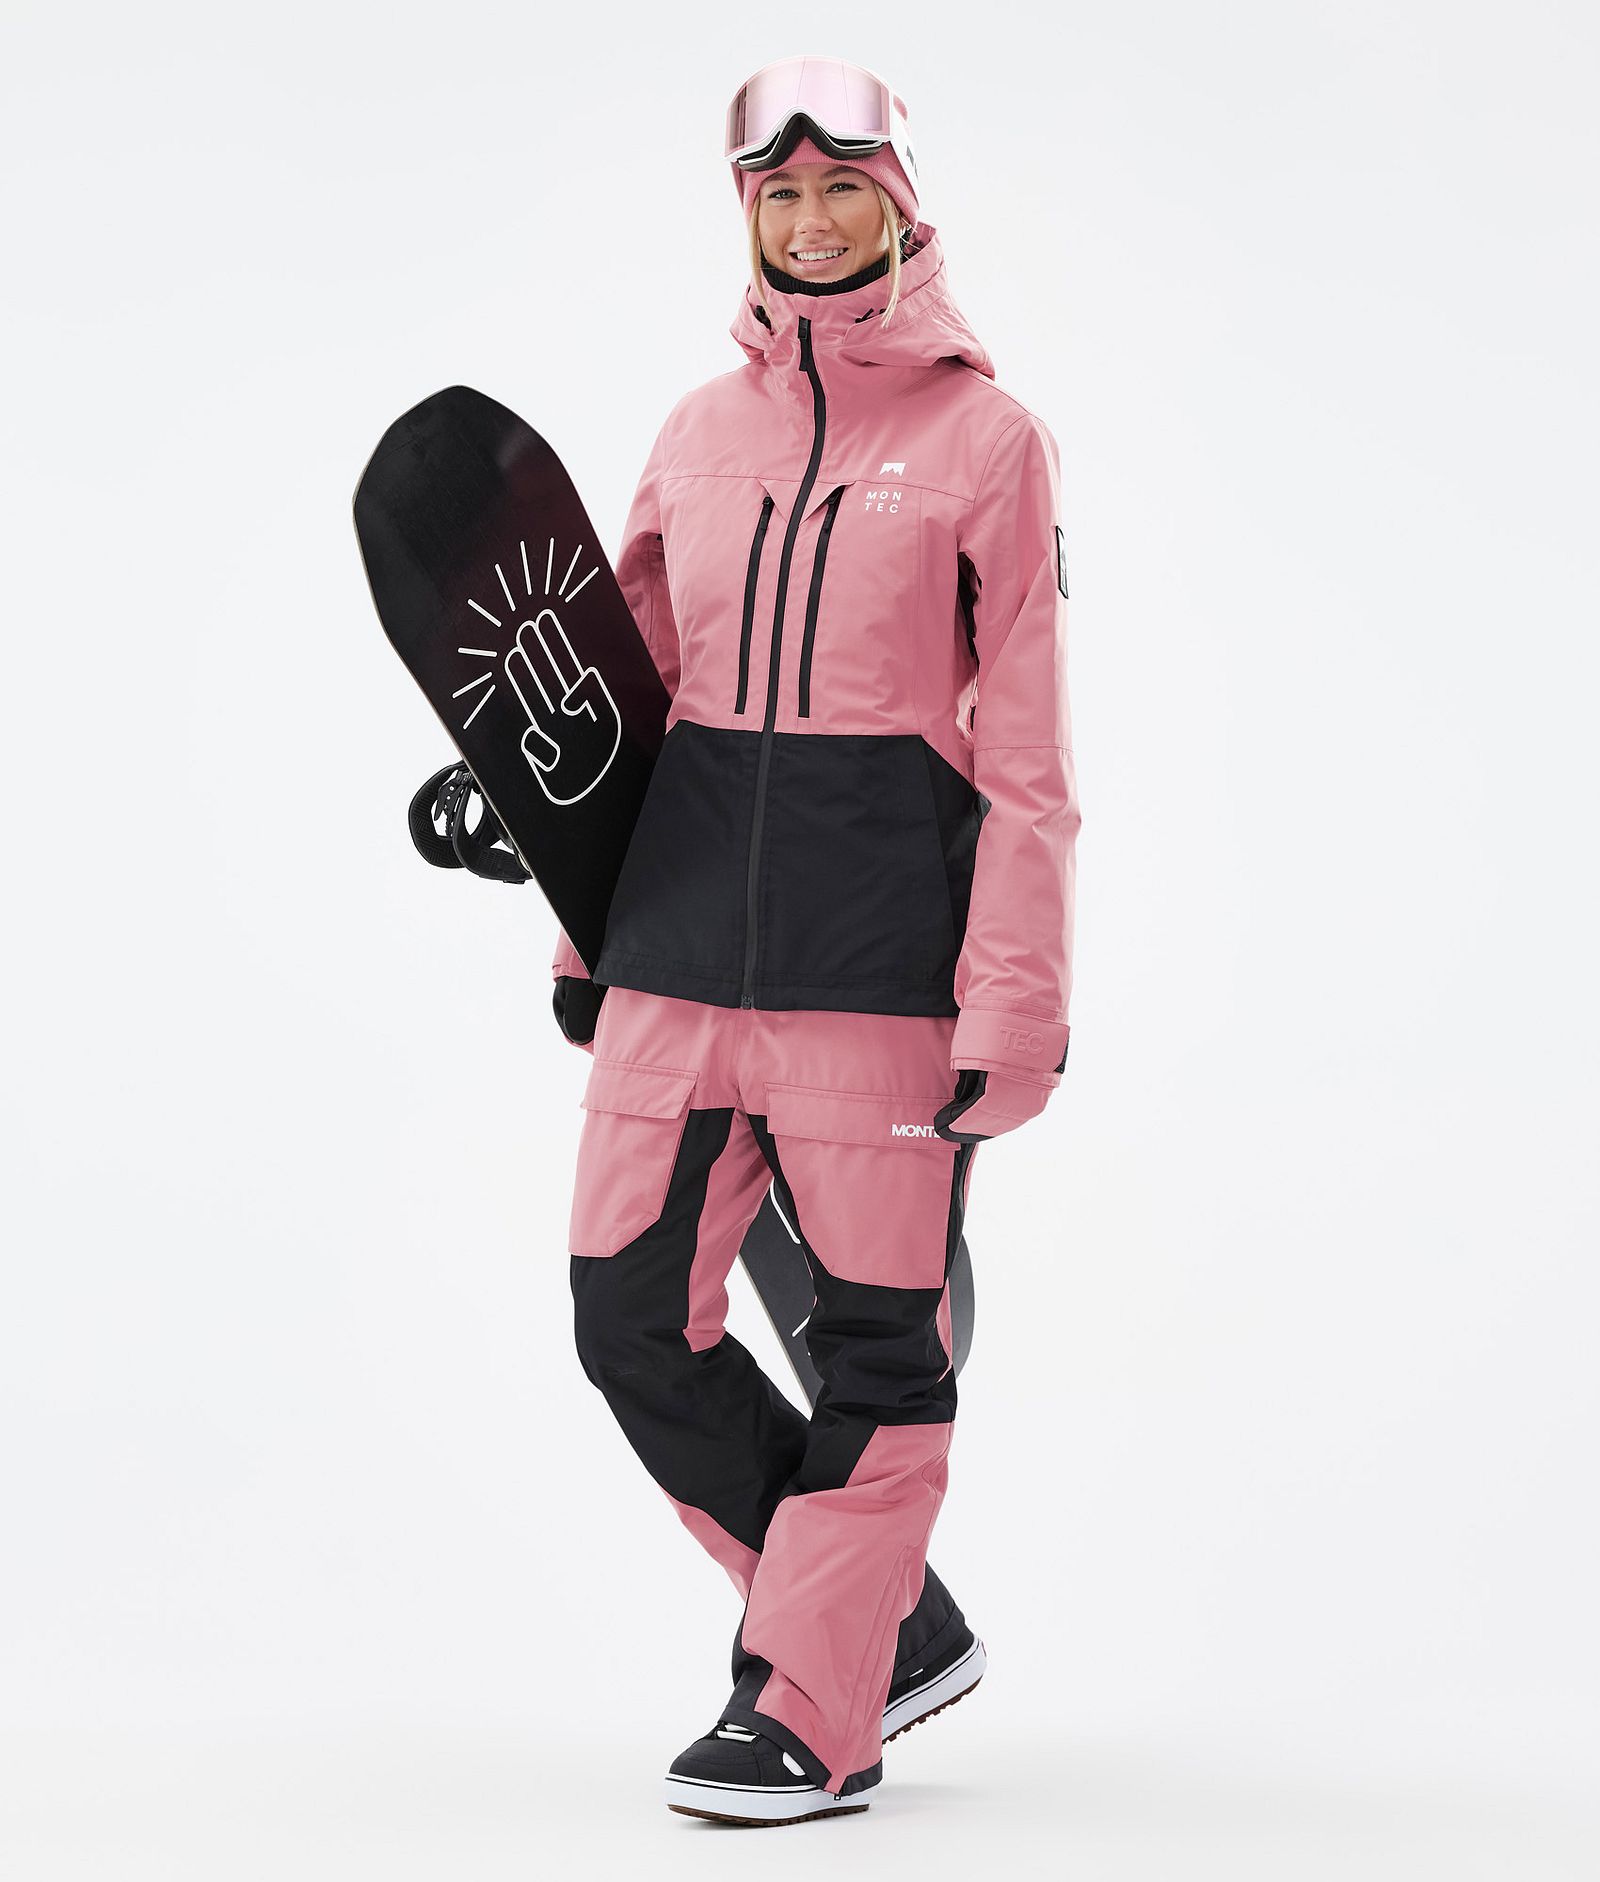 Moss W Snowboard Jacket Women Pink/Black, Image 3 of 10